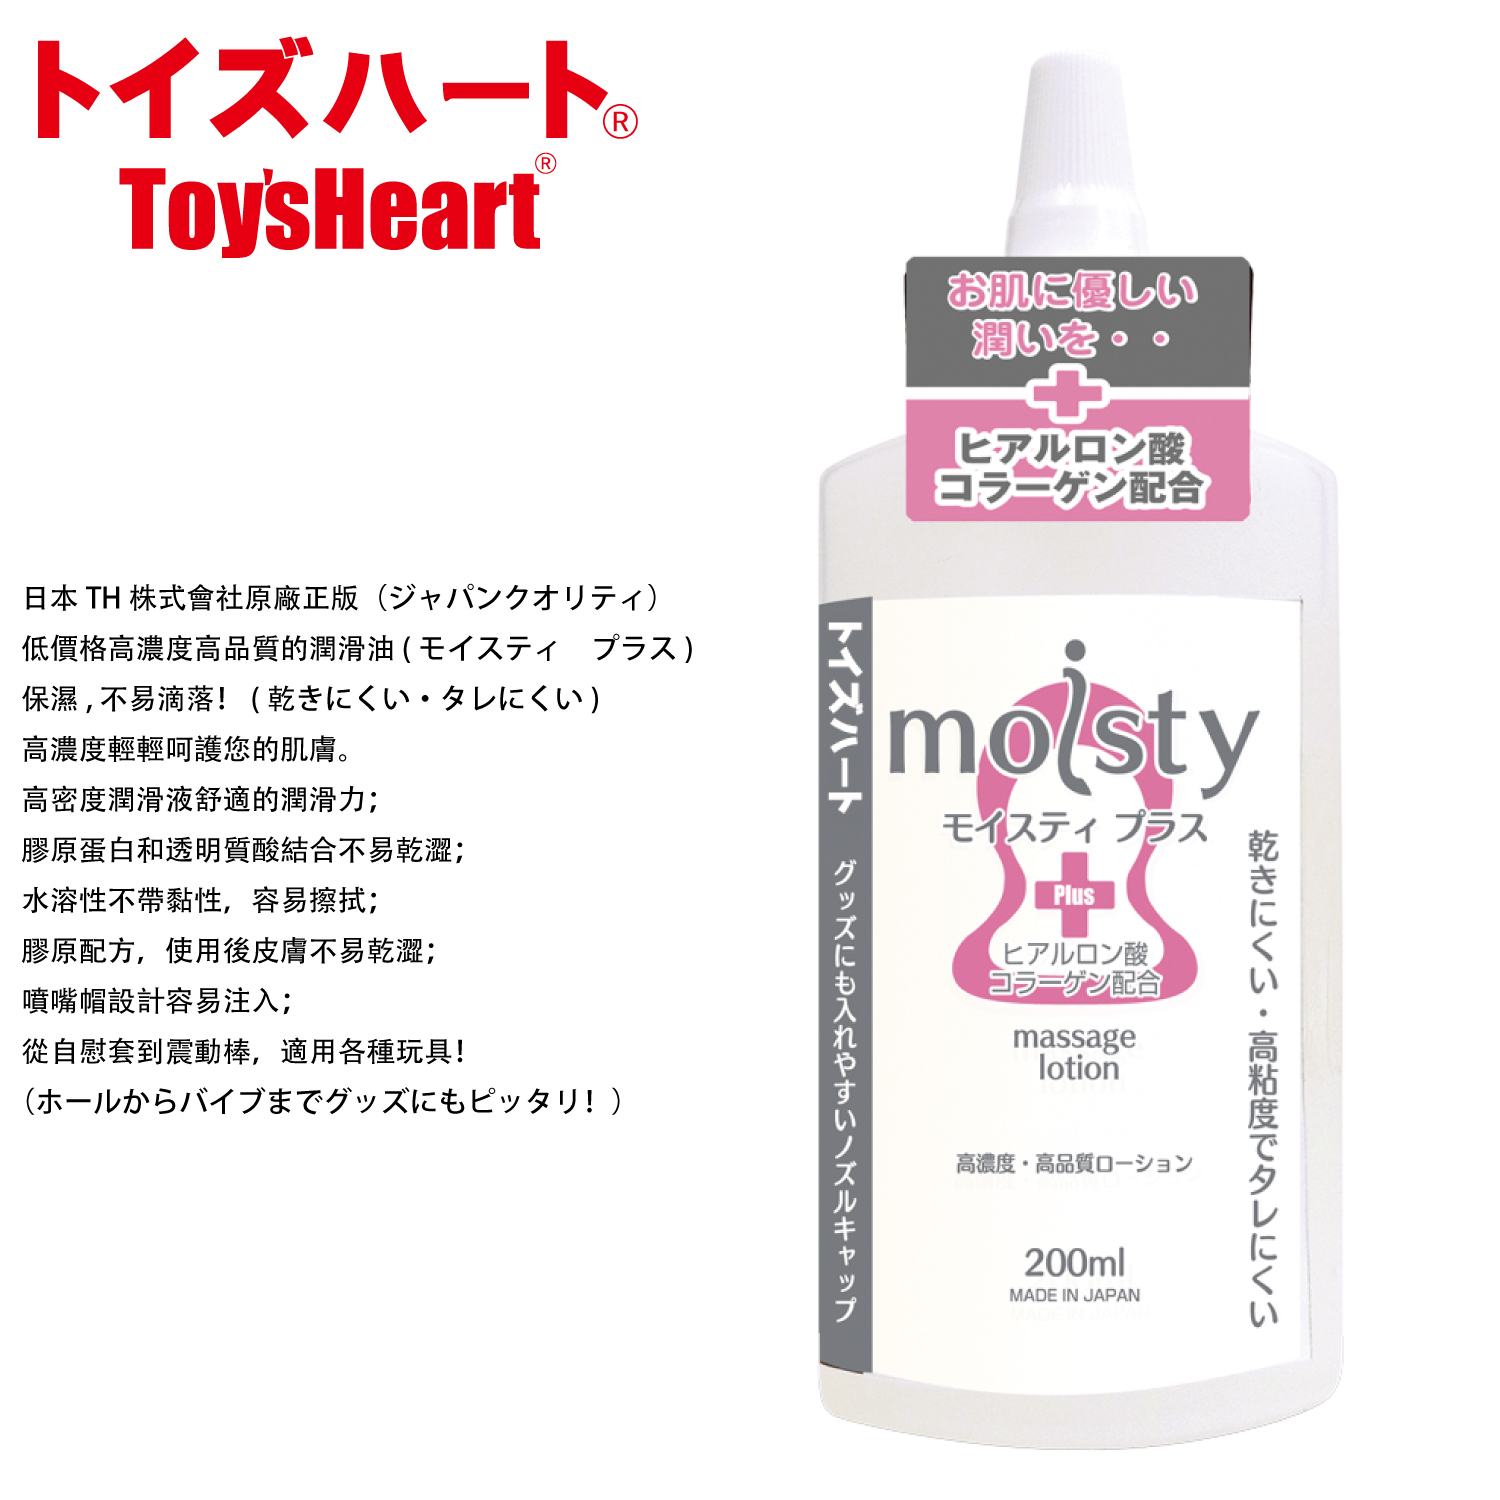 Toys Heart｜Moisty Plus 潤滑液 - 200ml